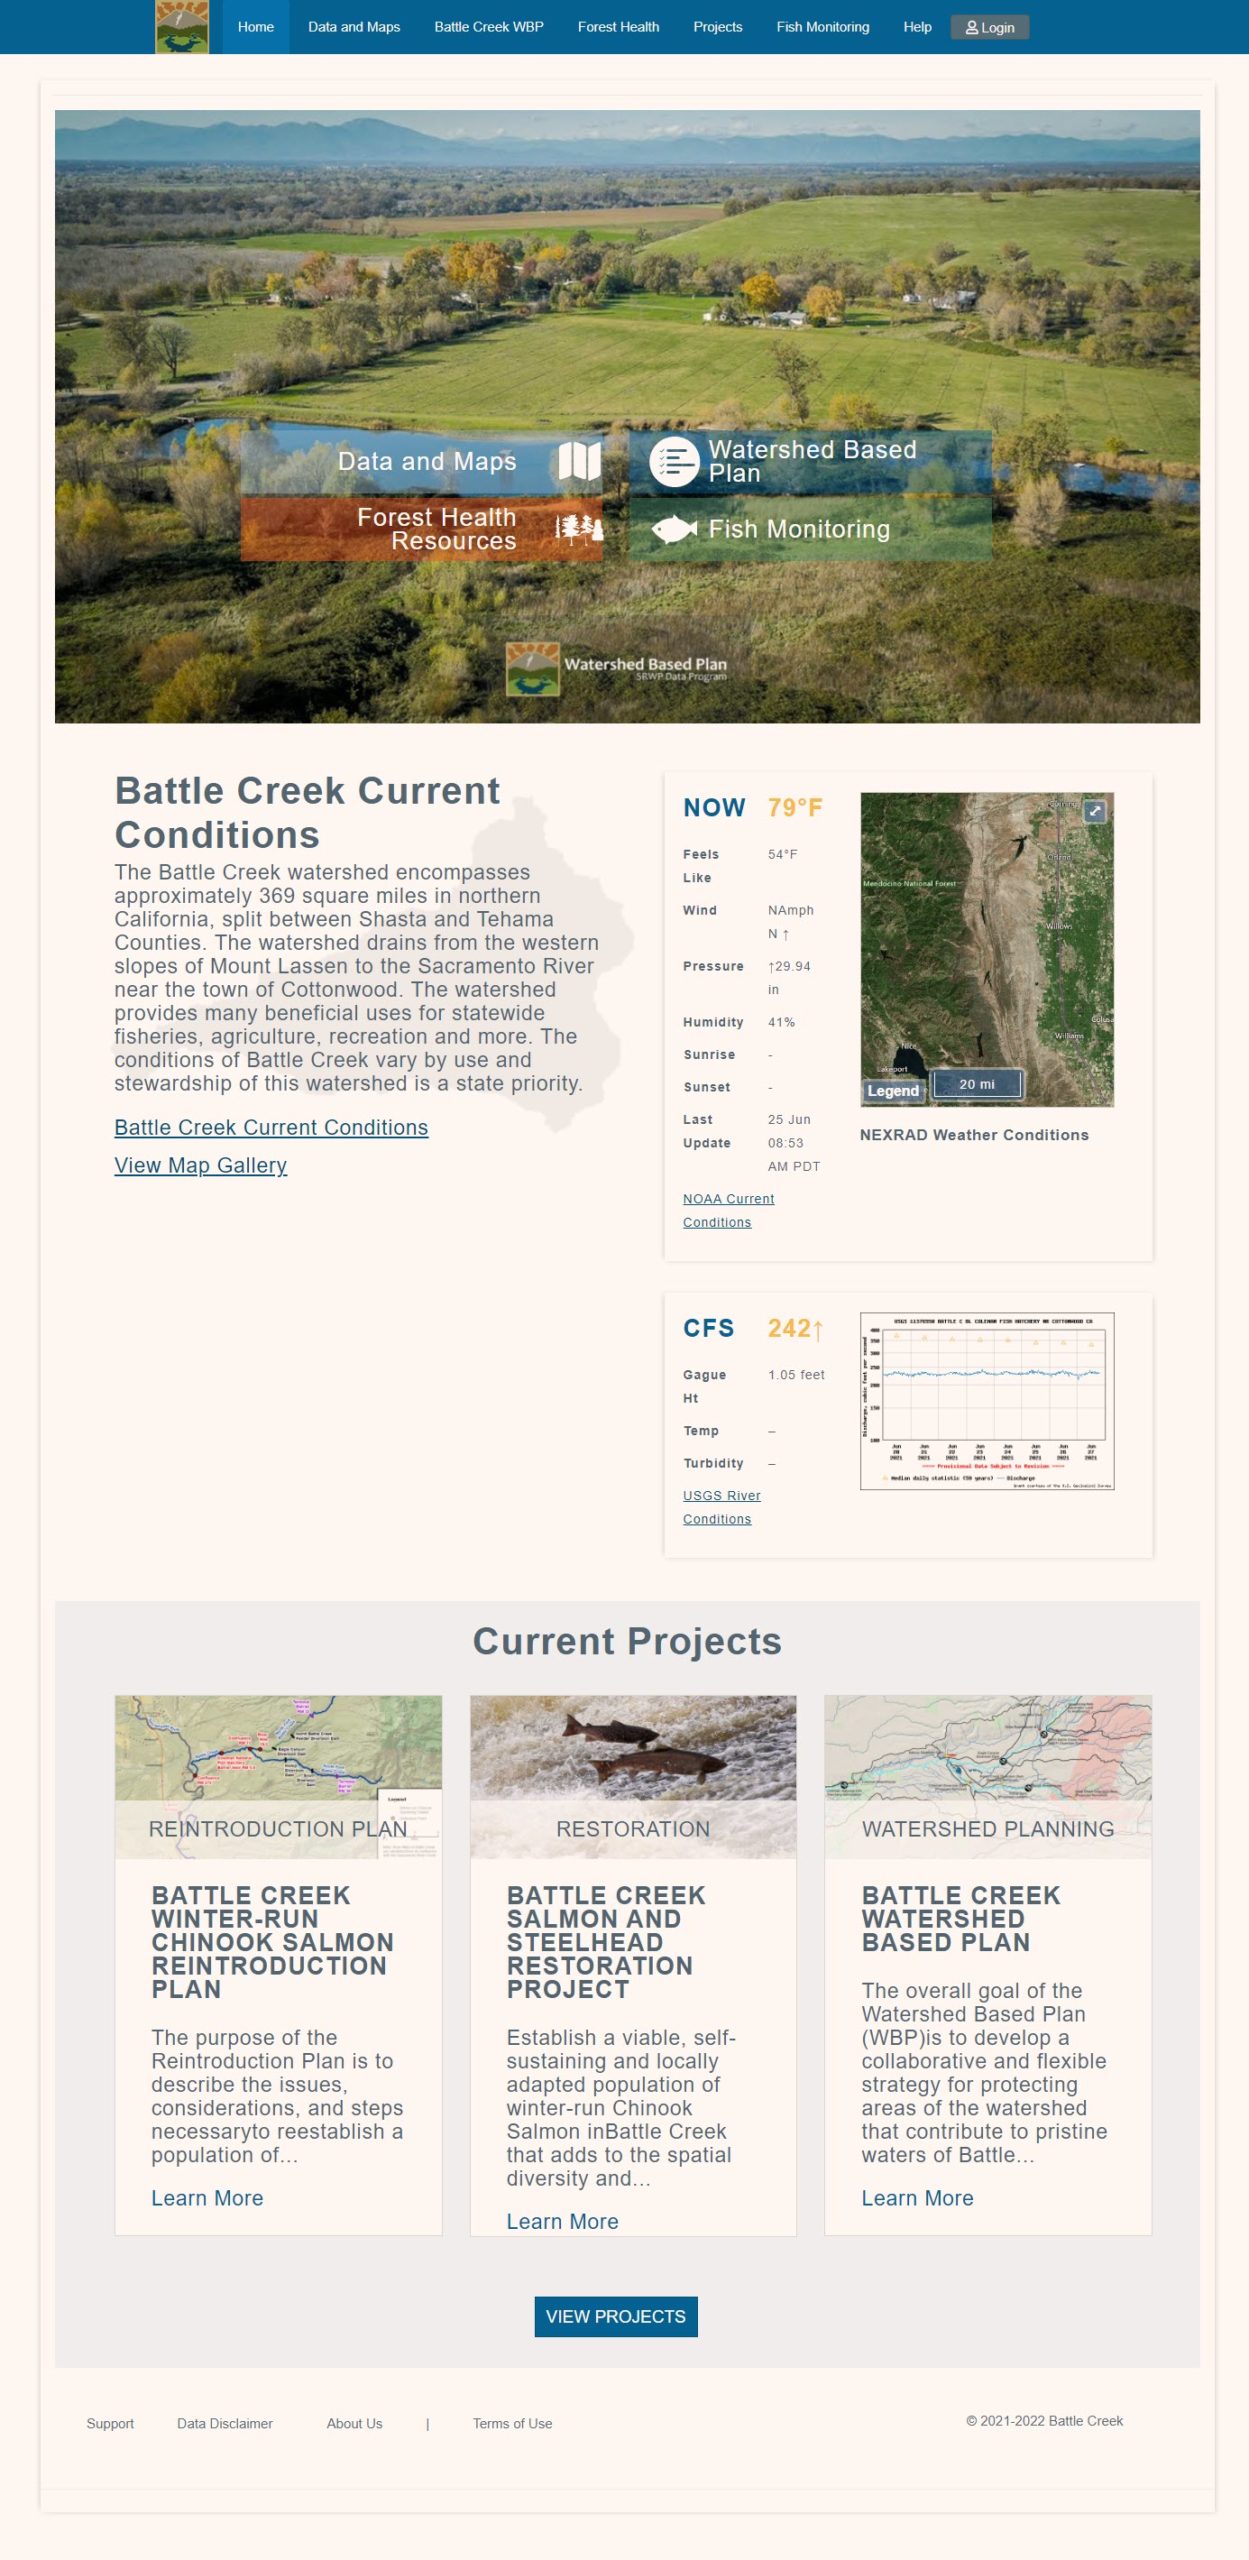 Battle Creek Watershed Based Plan